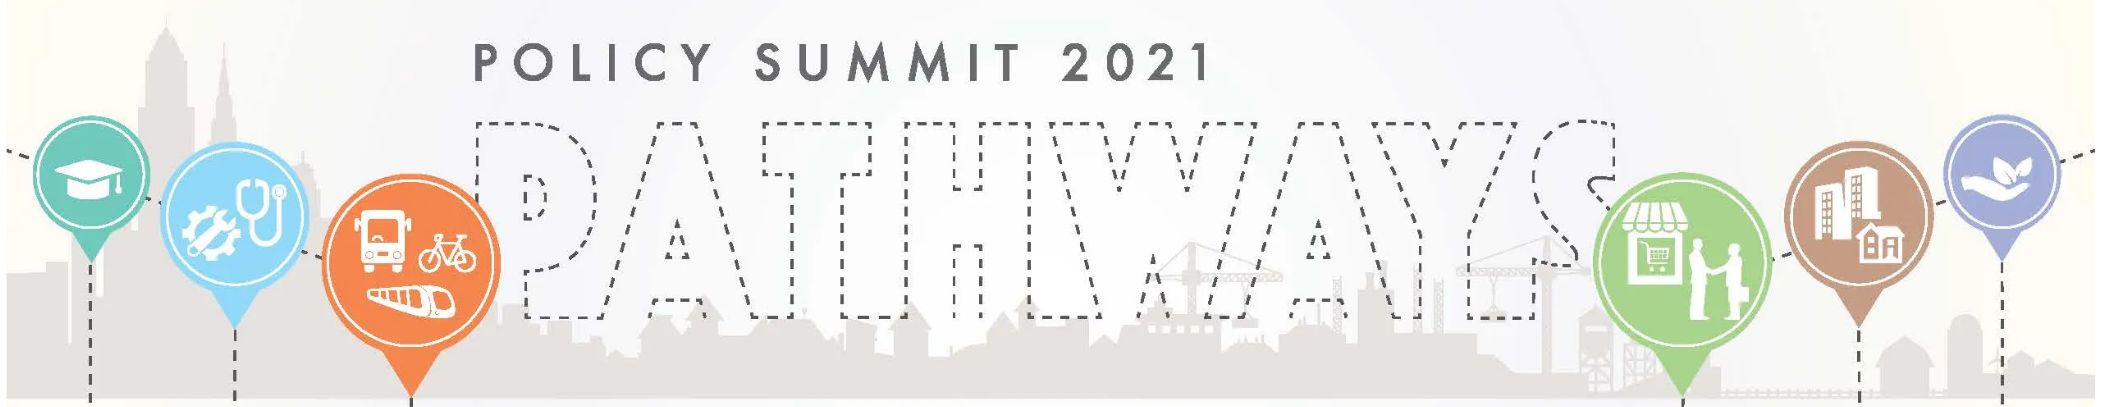 Policy Summit 2021